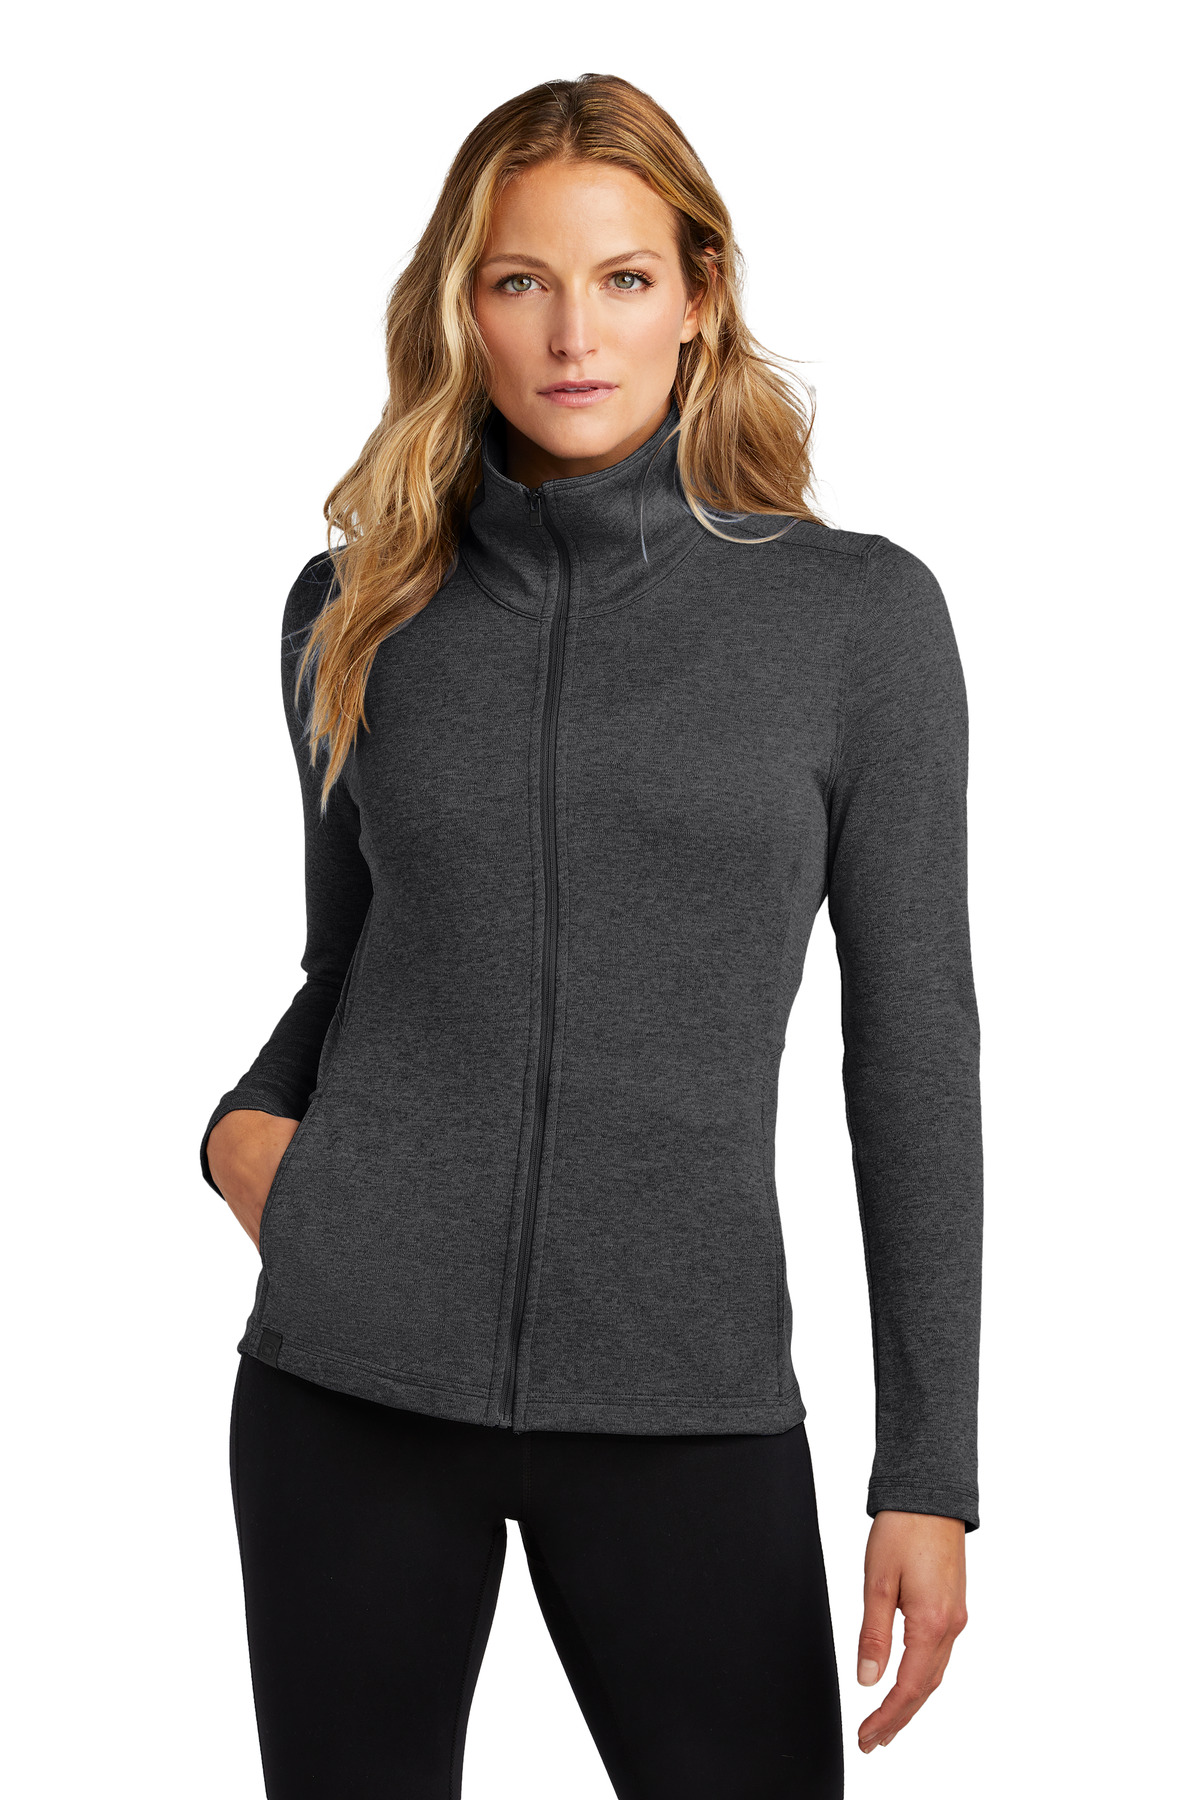 OGIO Ladies Sweatshirts & Fleece for Hospitality ® Ladies Pixel Full-Zip.-OGIO